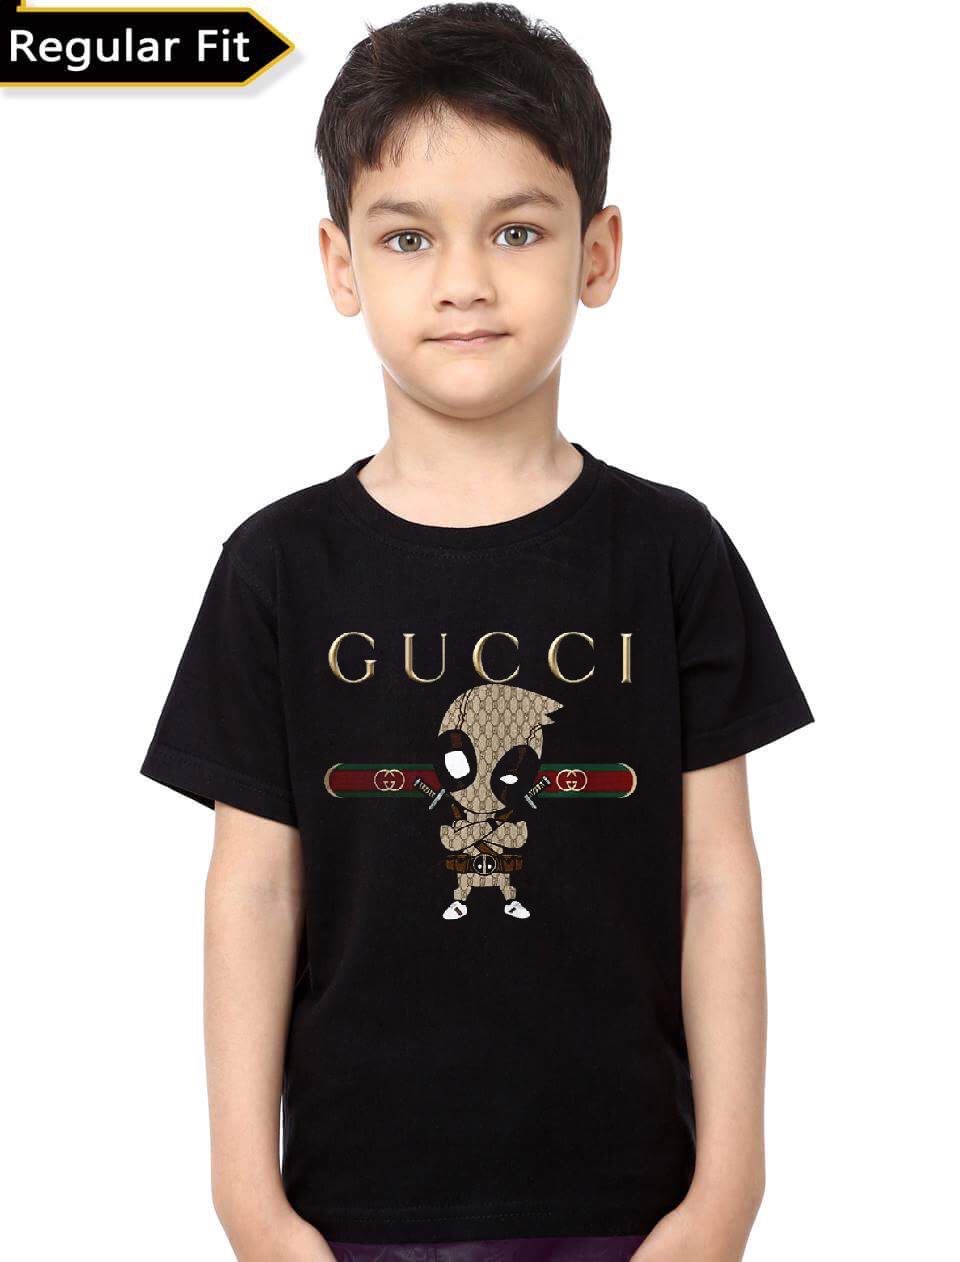 gucci toddler t shirt